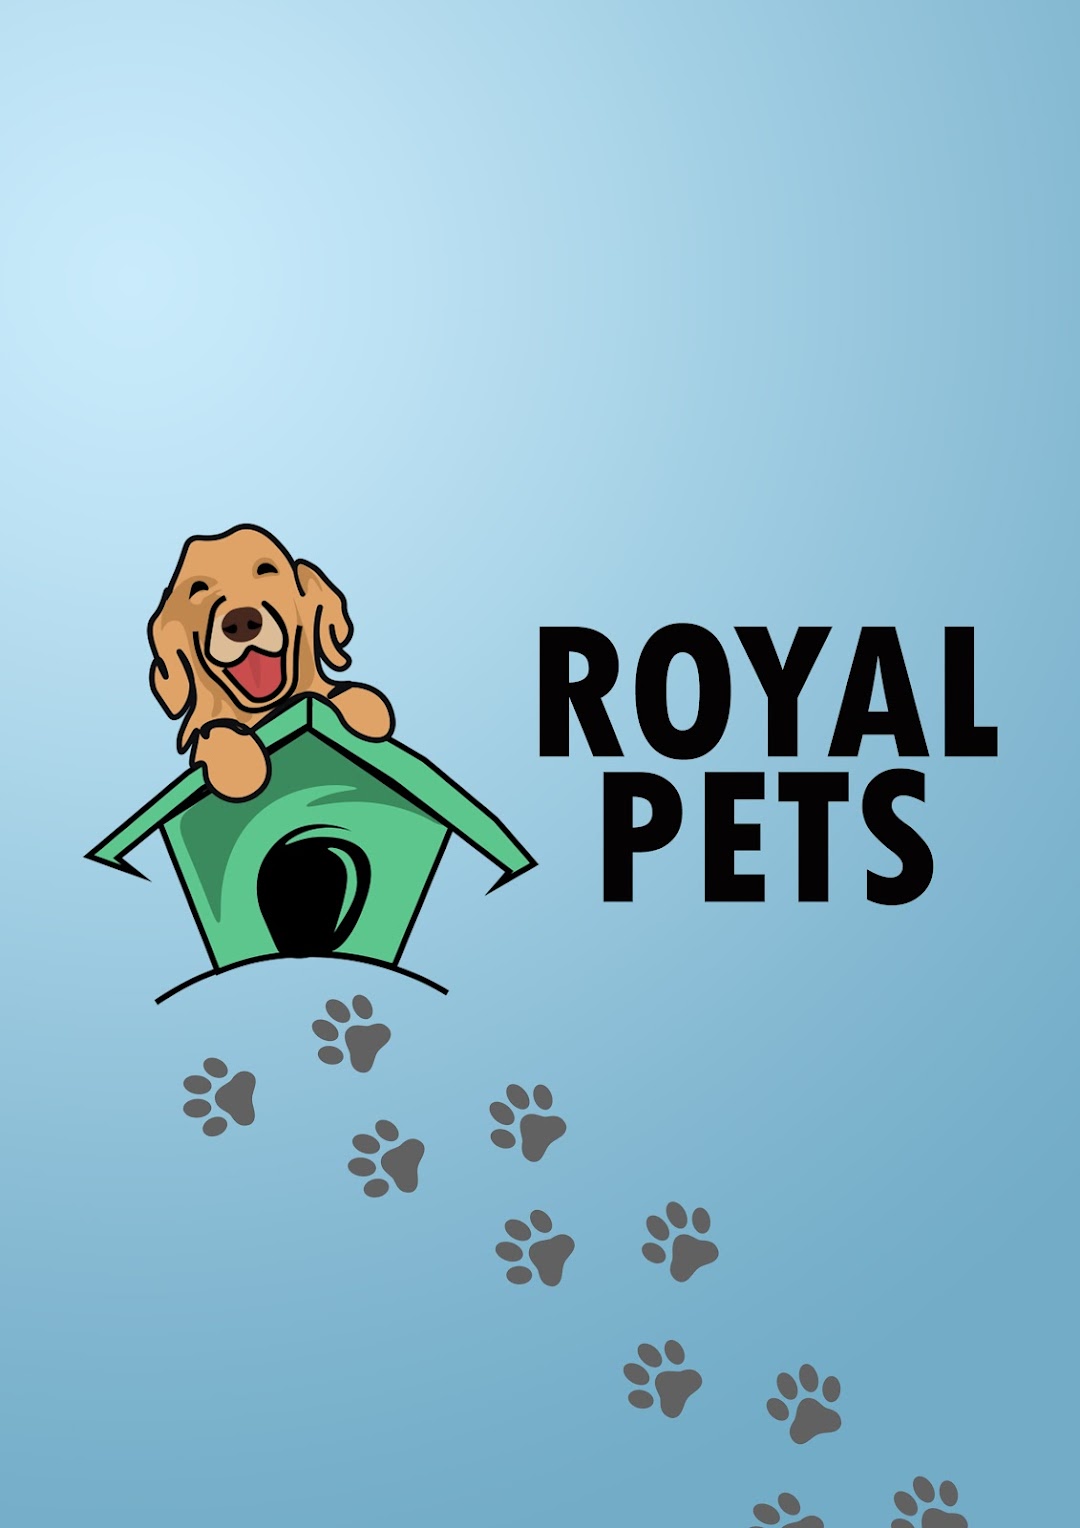 Royal Pets Clinic